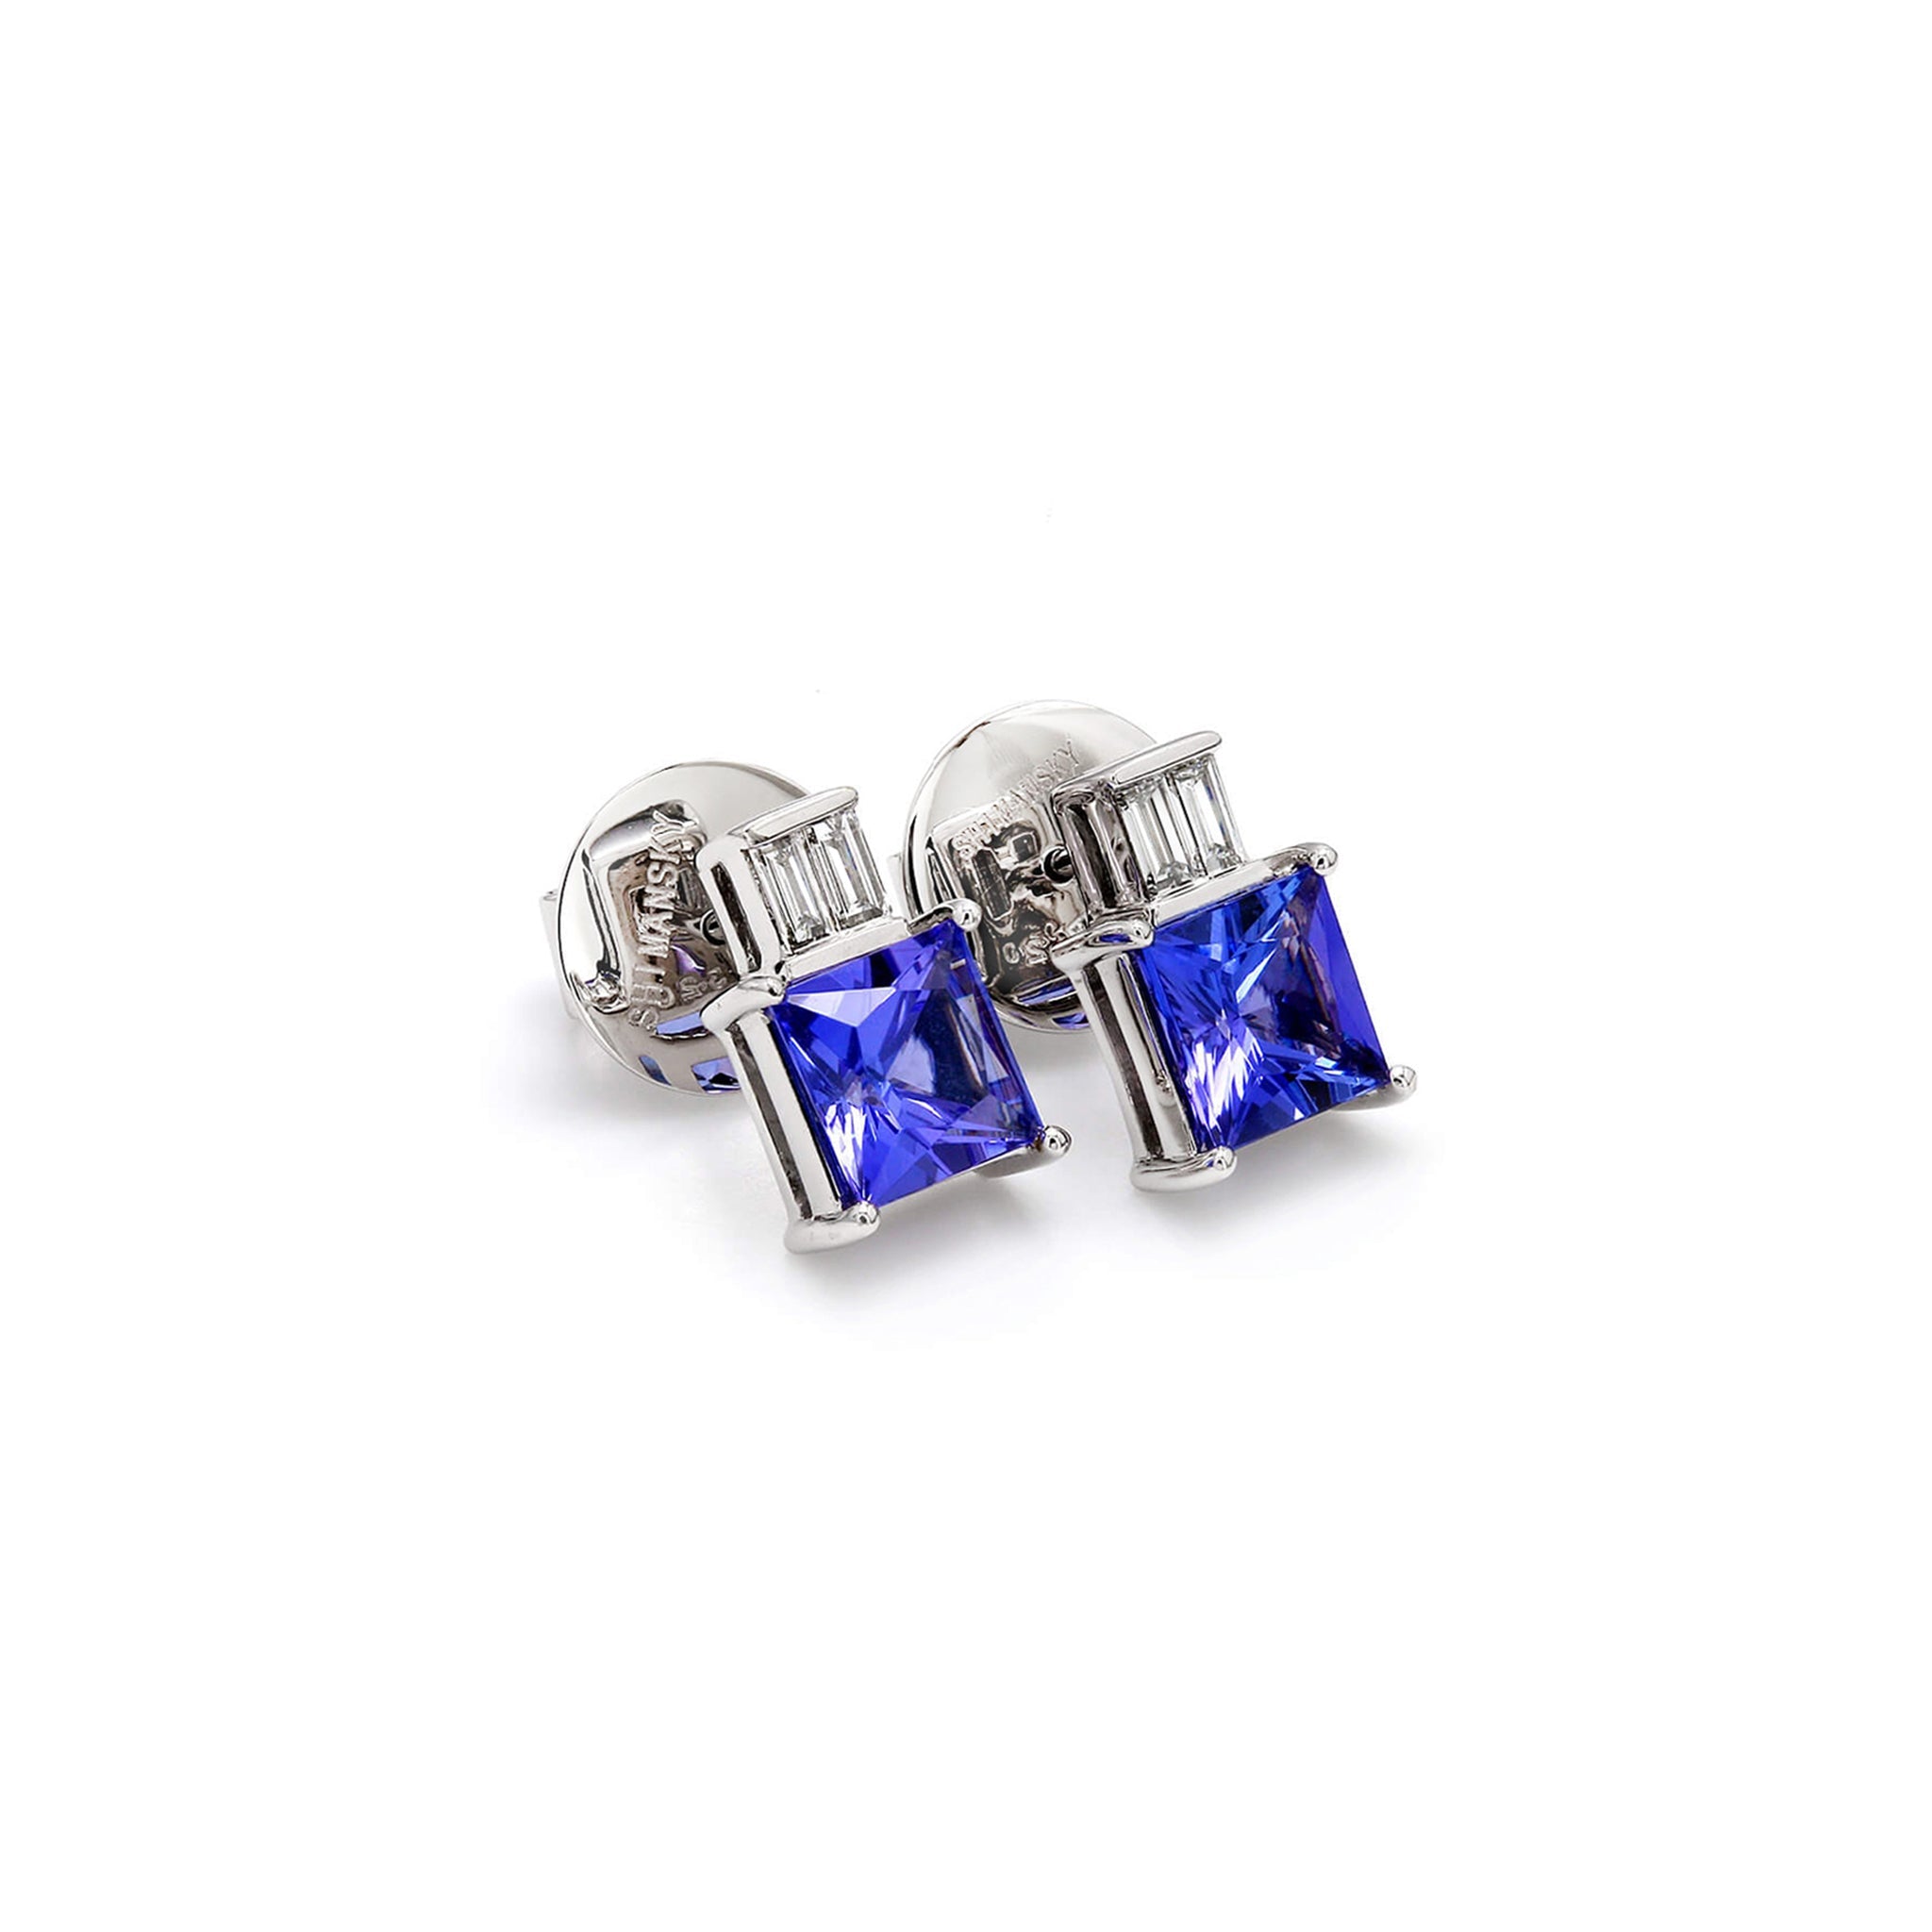 Tanzanite and Diamond Earrings - 3D View - Shimansky